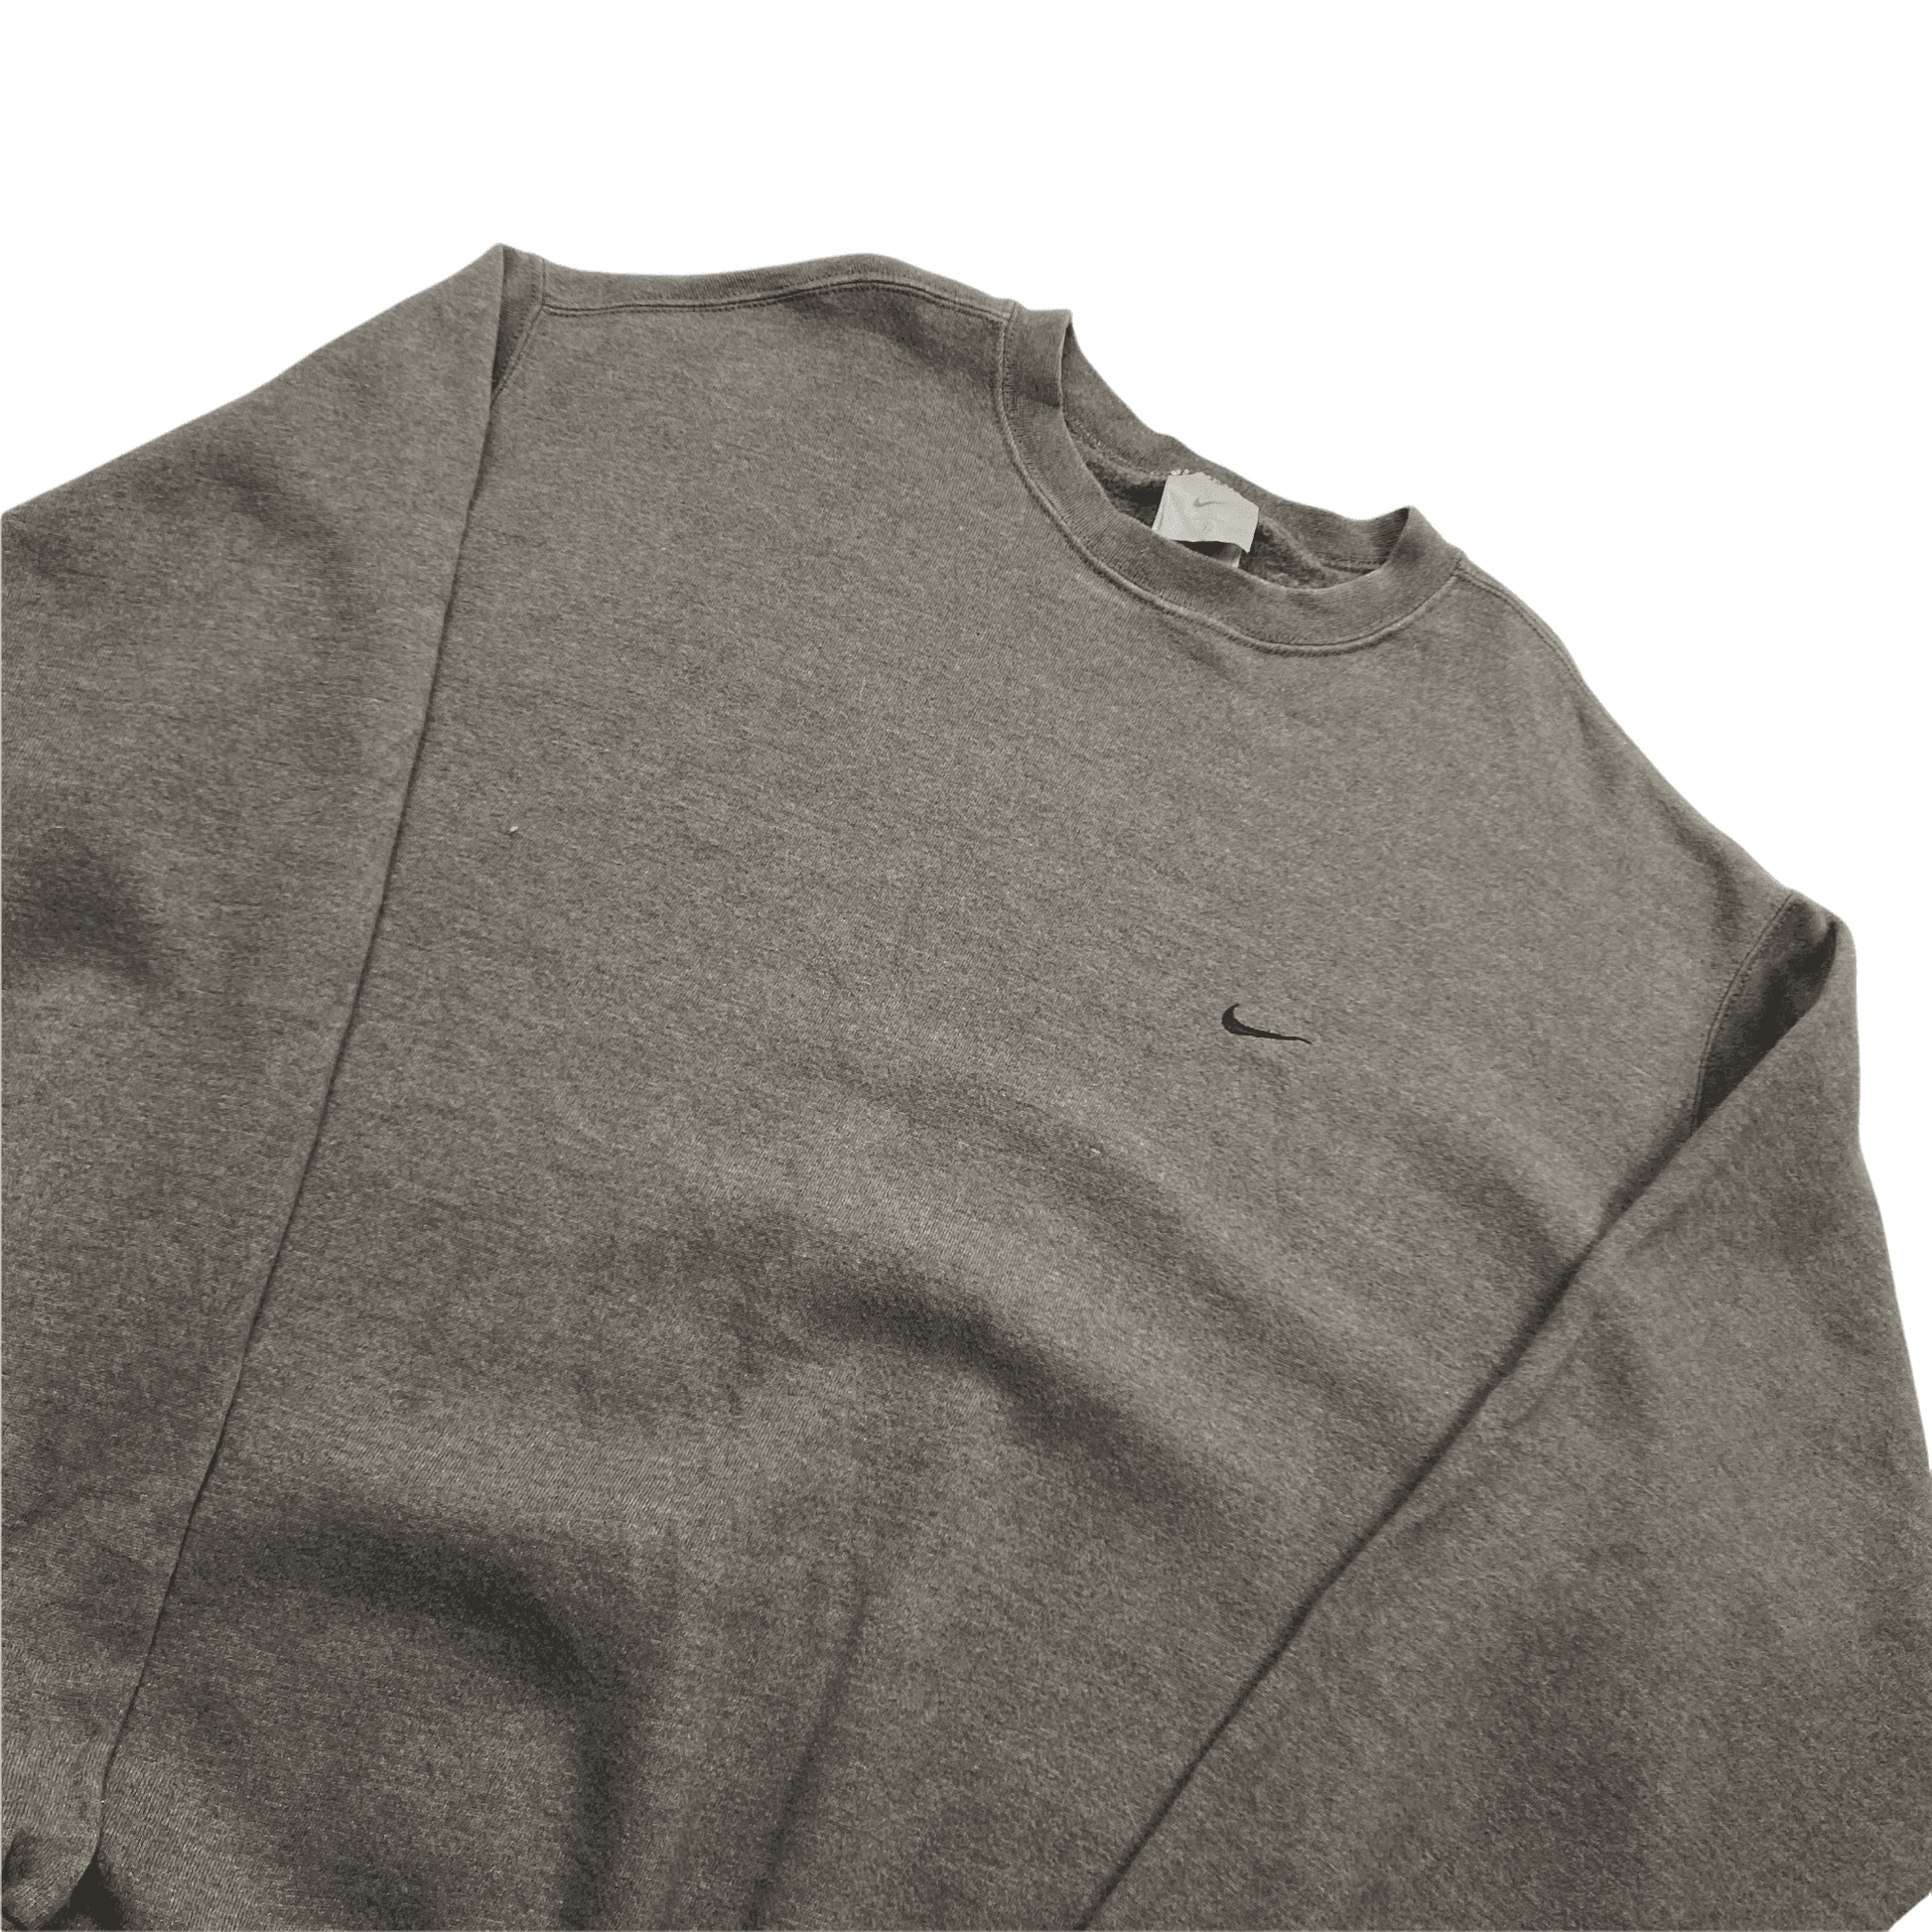 Vintage 90s Grey Nike Sweatshirt - Extra Large - The Streetwear Studio